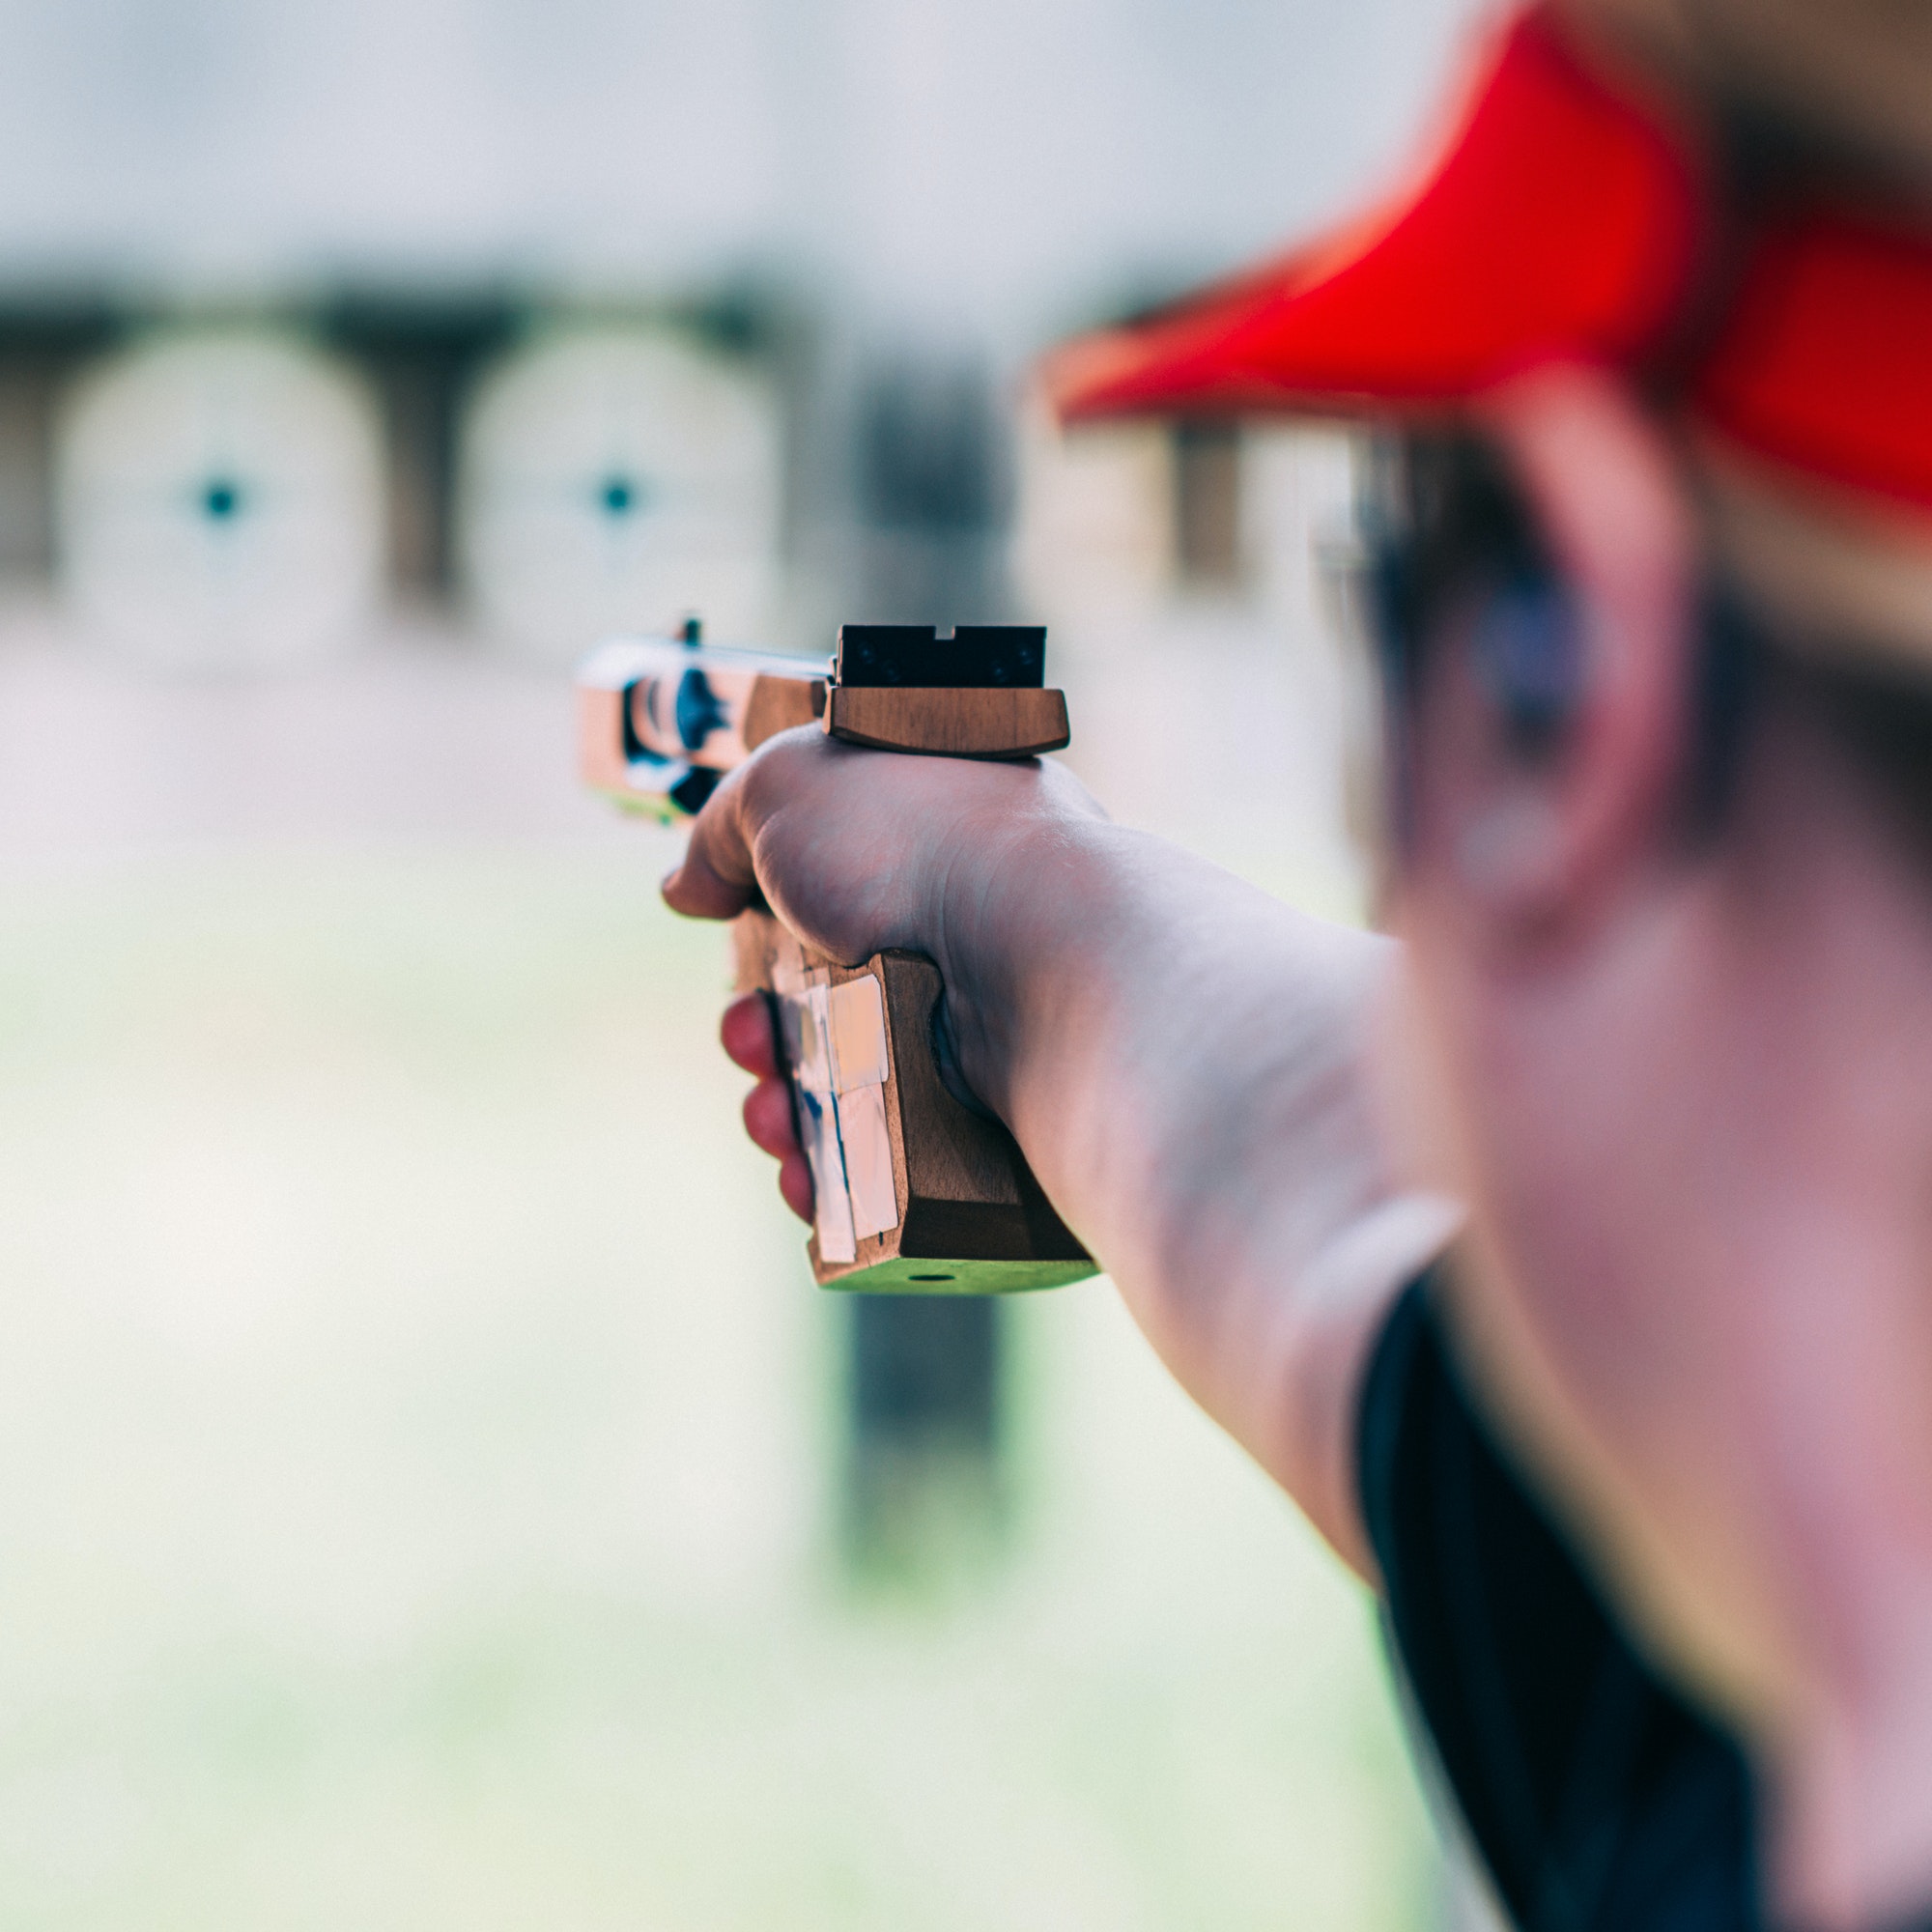 Woman on sport shooting training shooting target